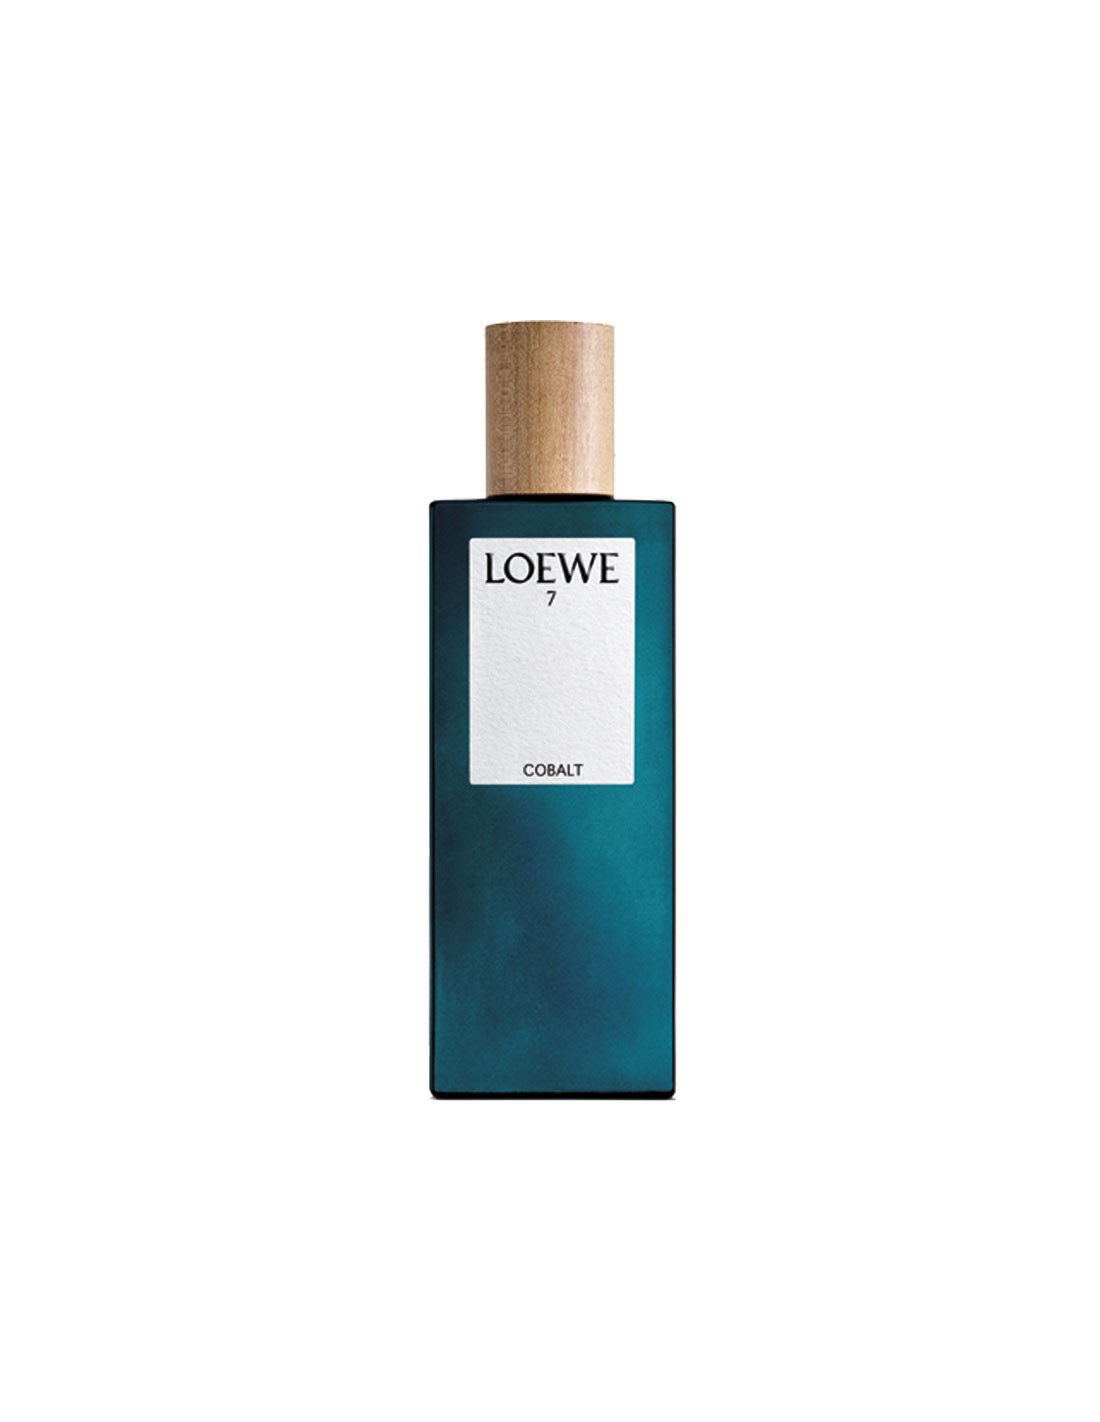 Loewe 7 Cobalt Eau De Parfum Vaporisateur 100ml